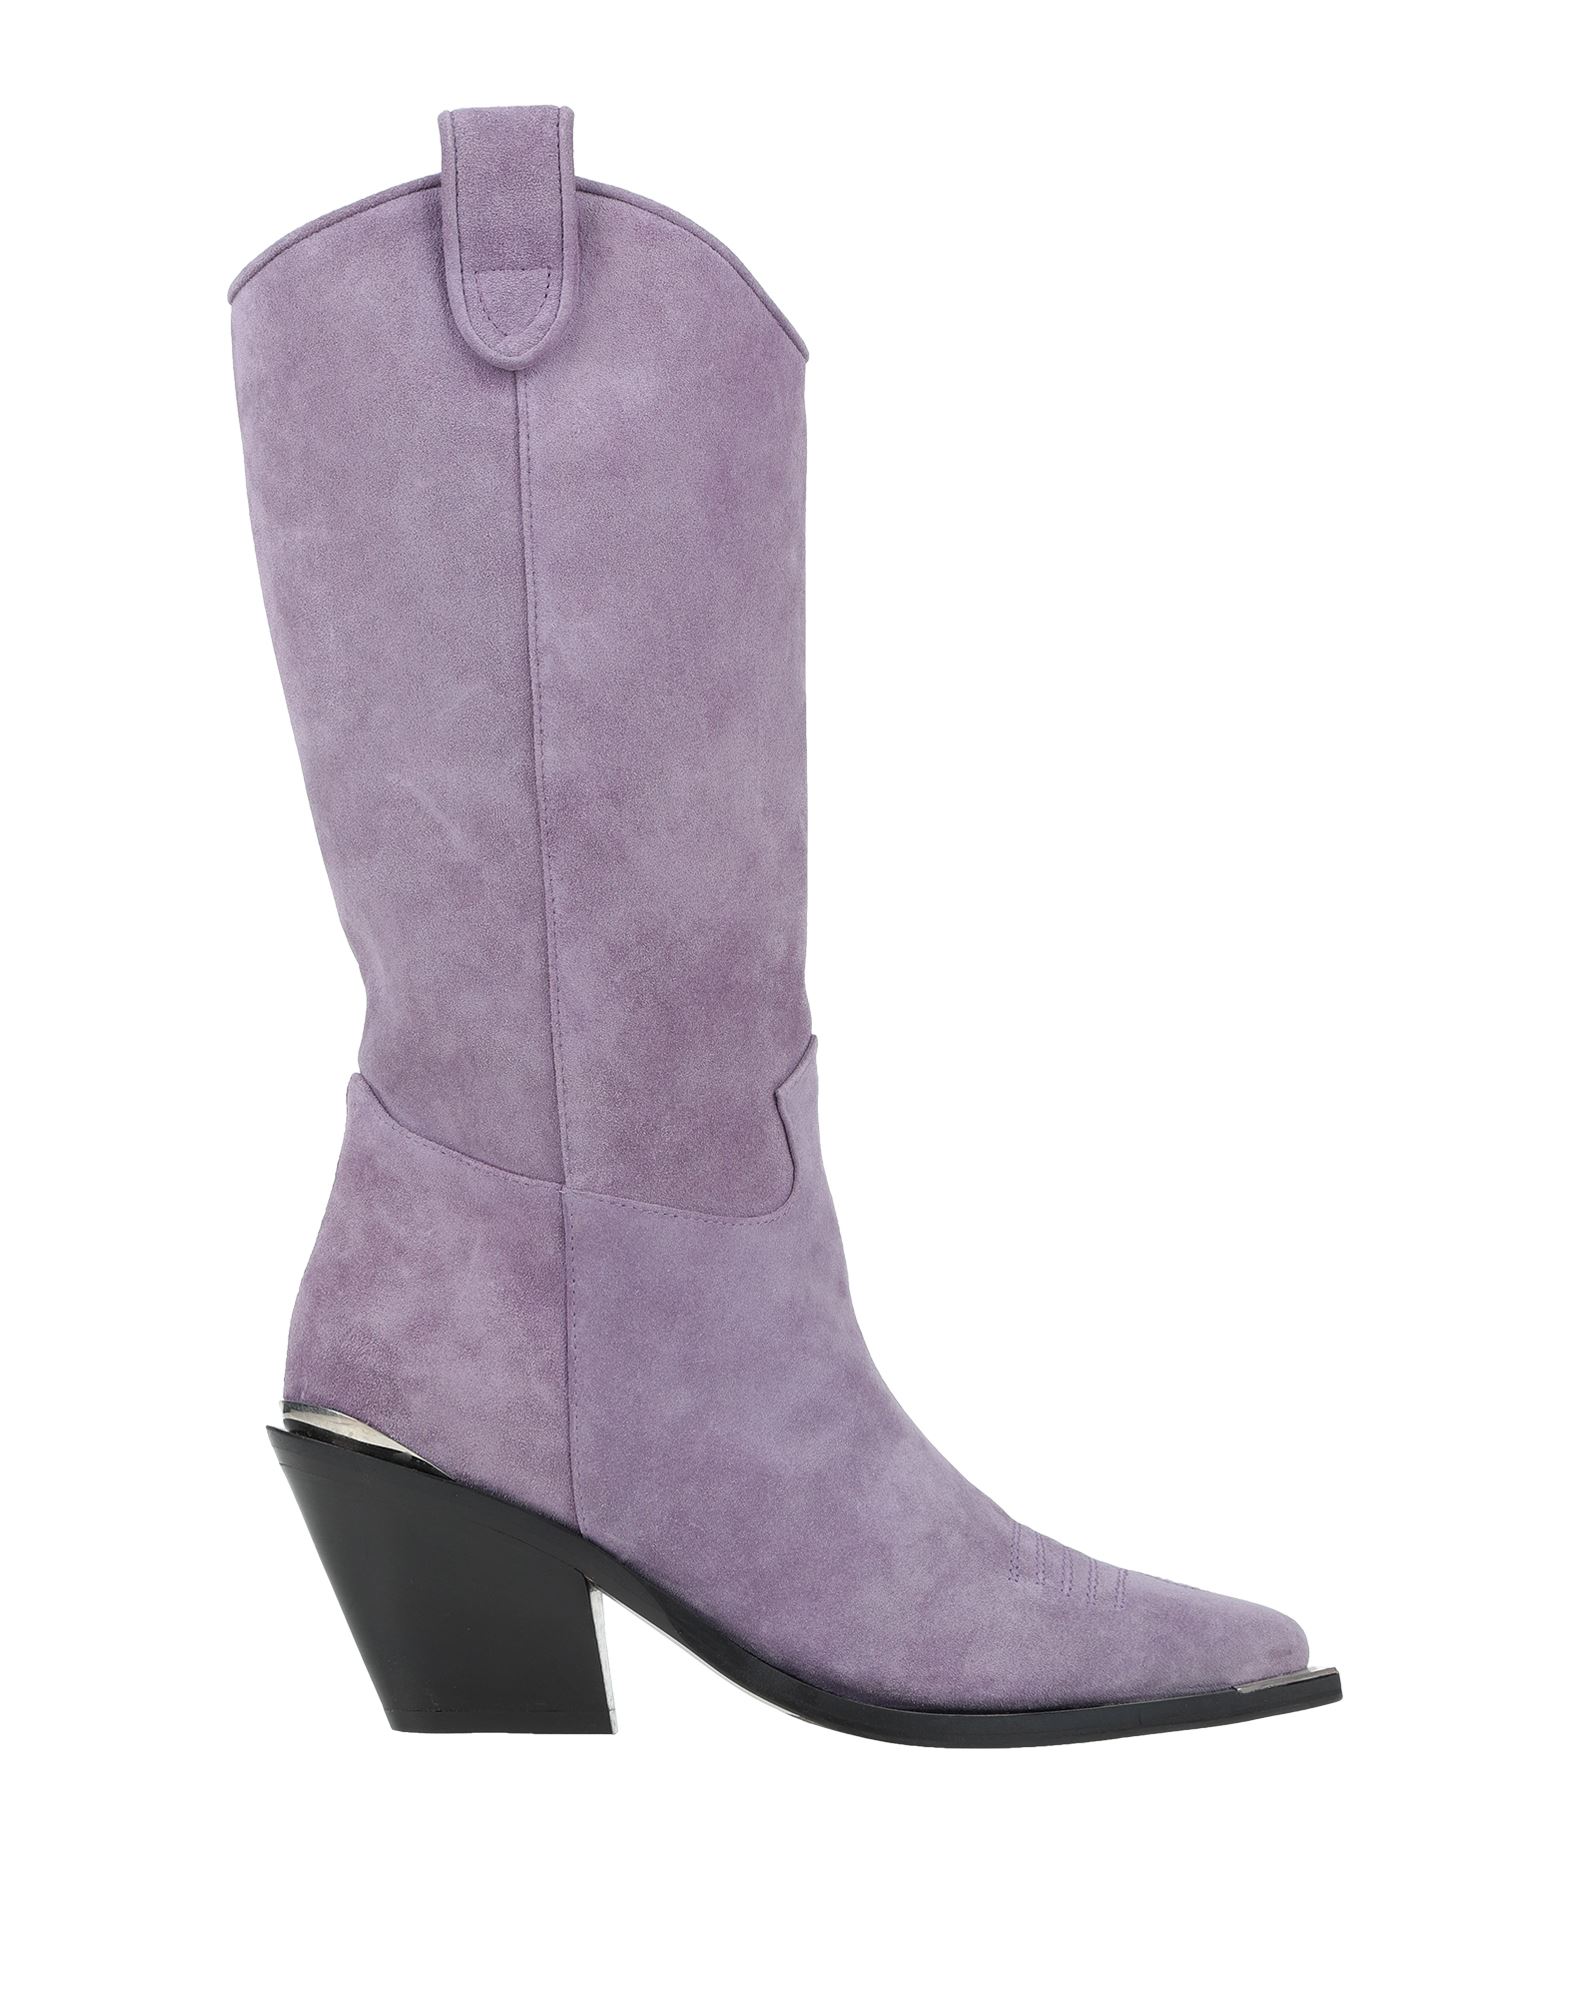 Aldo Castagna For Shabby Chic Knee Boots In Light Purple